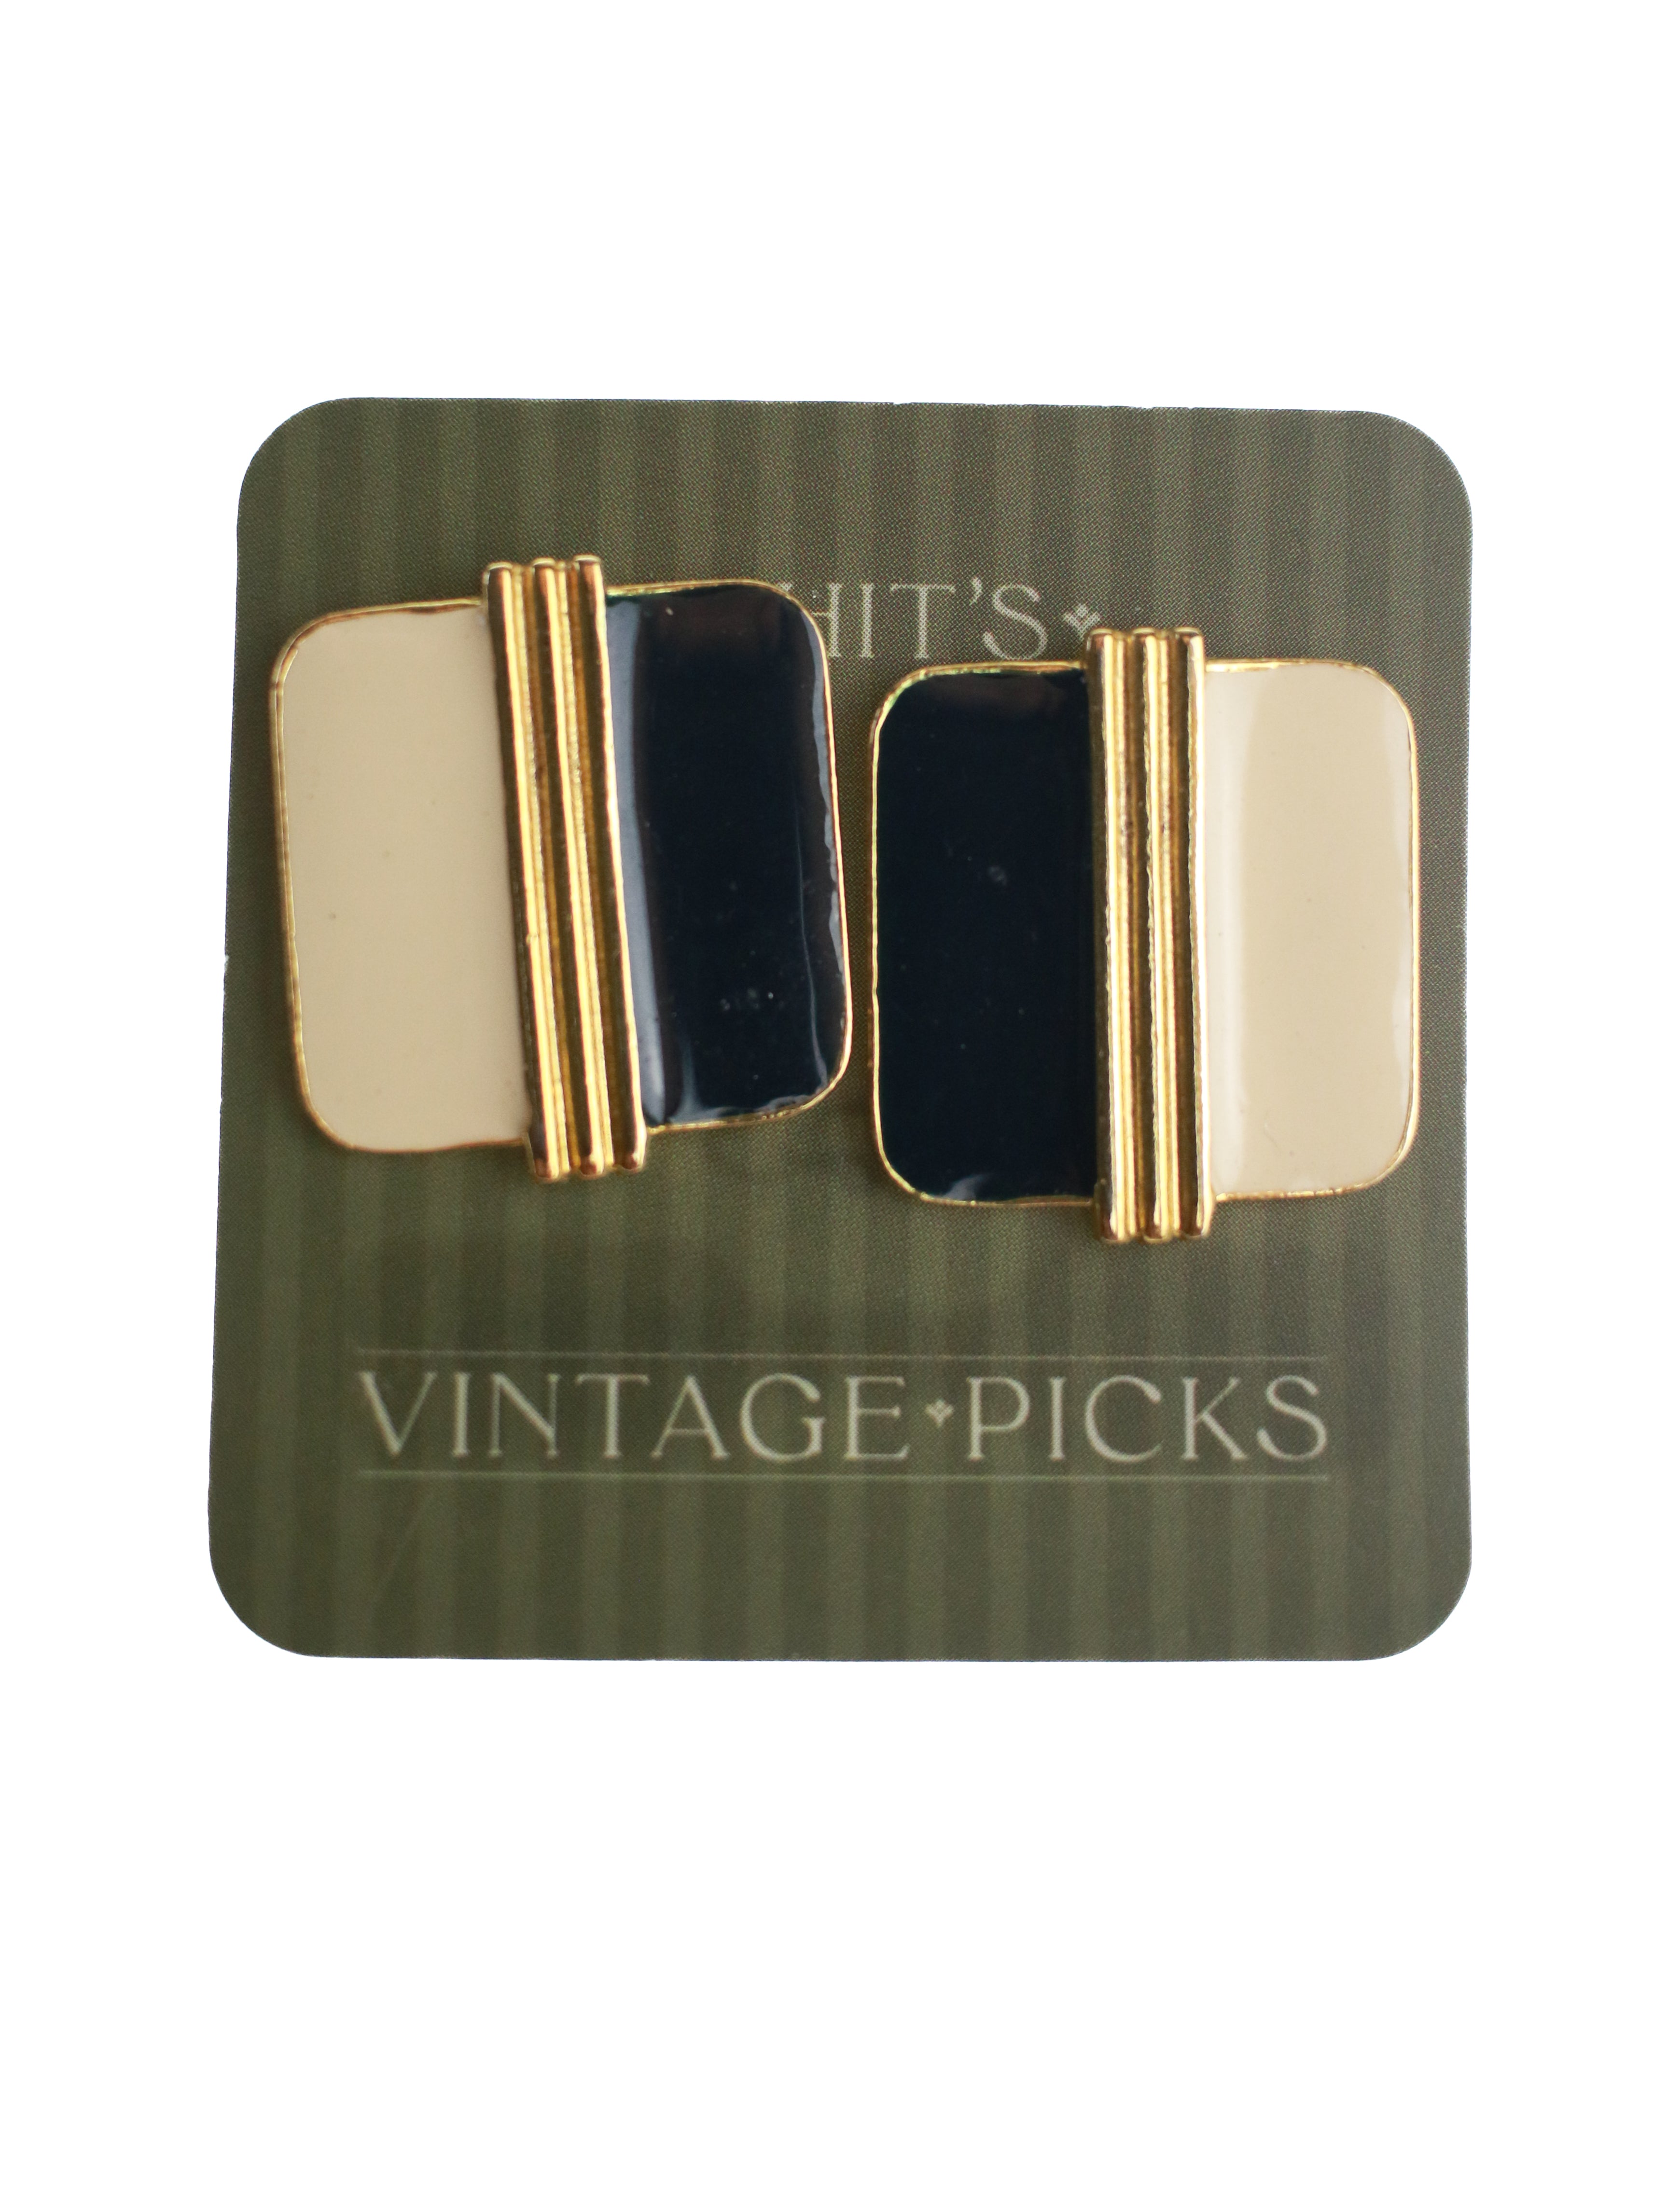 Whit's Vintage Picks- Earrings 123